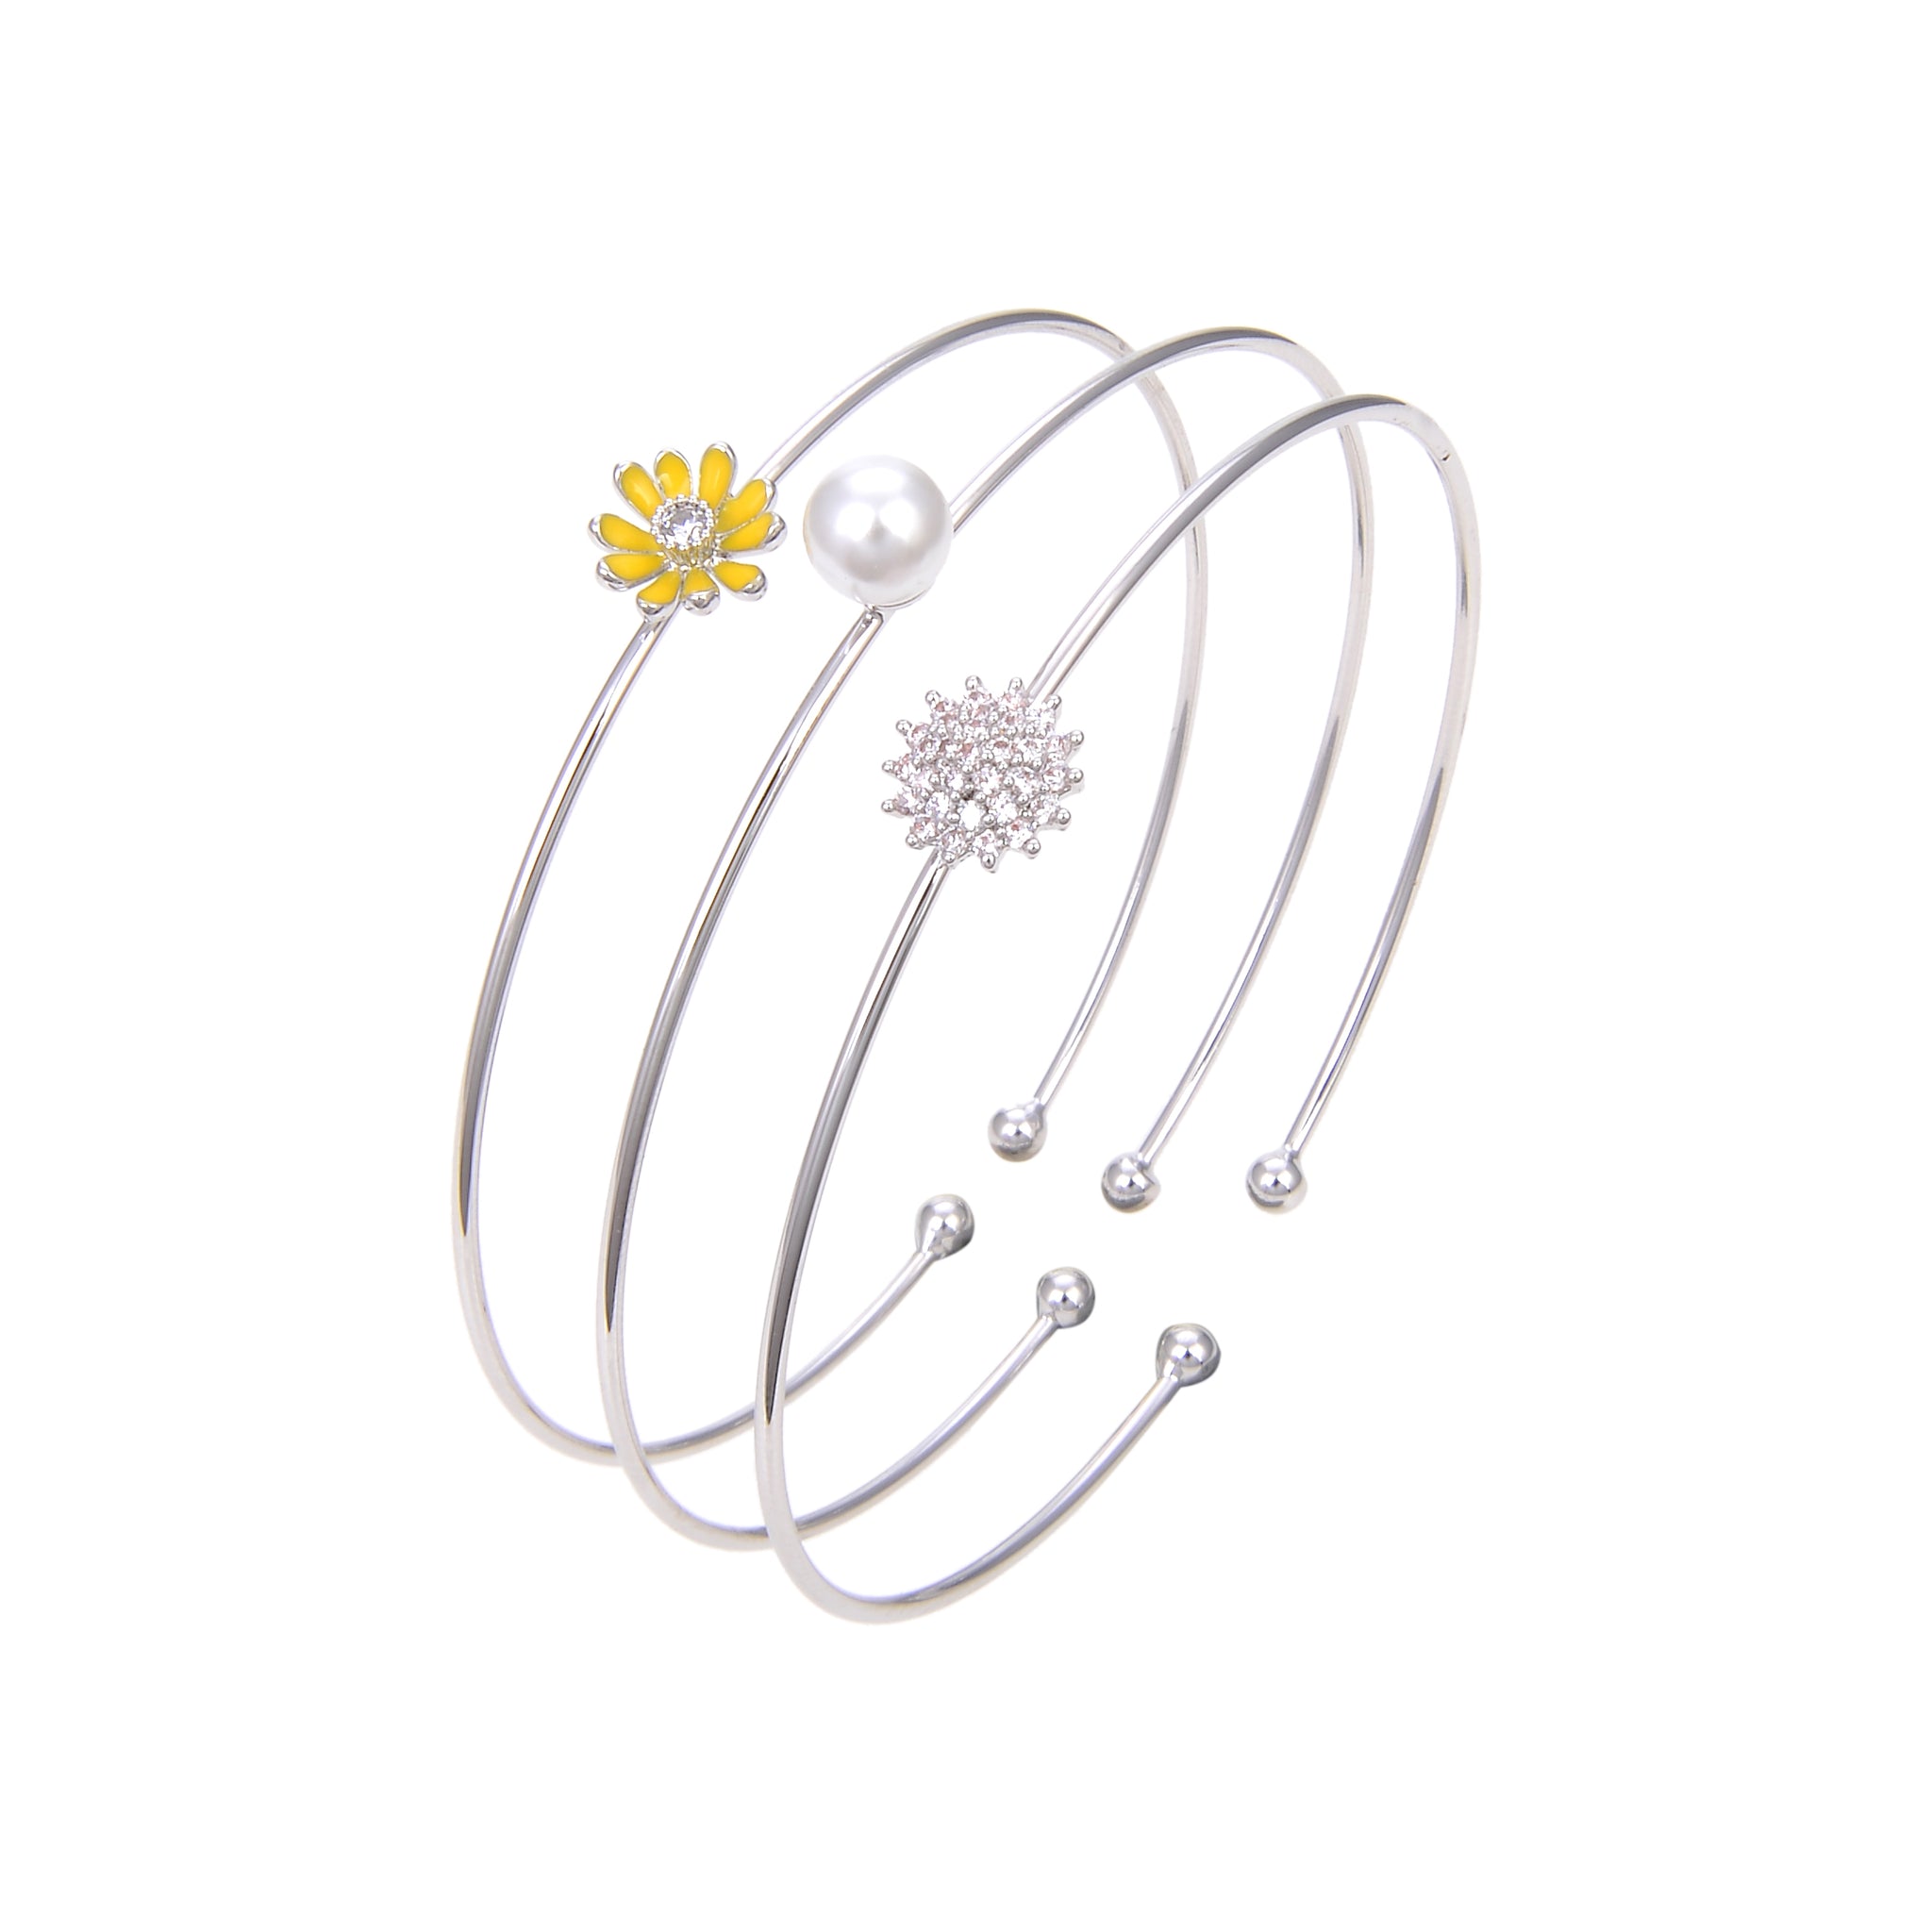 Silver Plated Cubic Zirconia Pearl Bangle Bracelet, Flower Printed CZ Bangle Bracelet